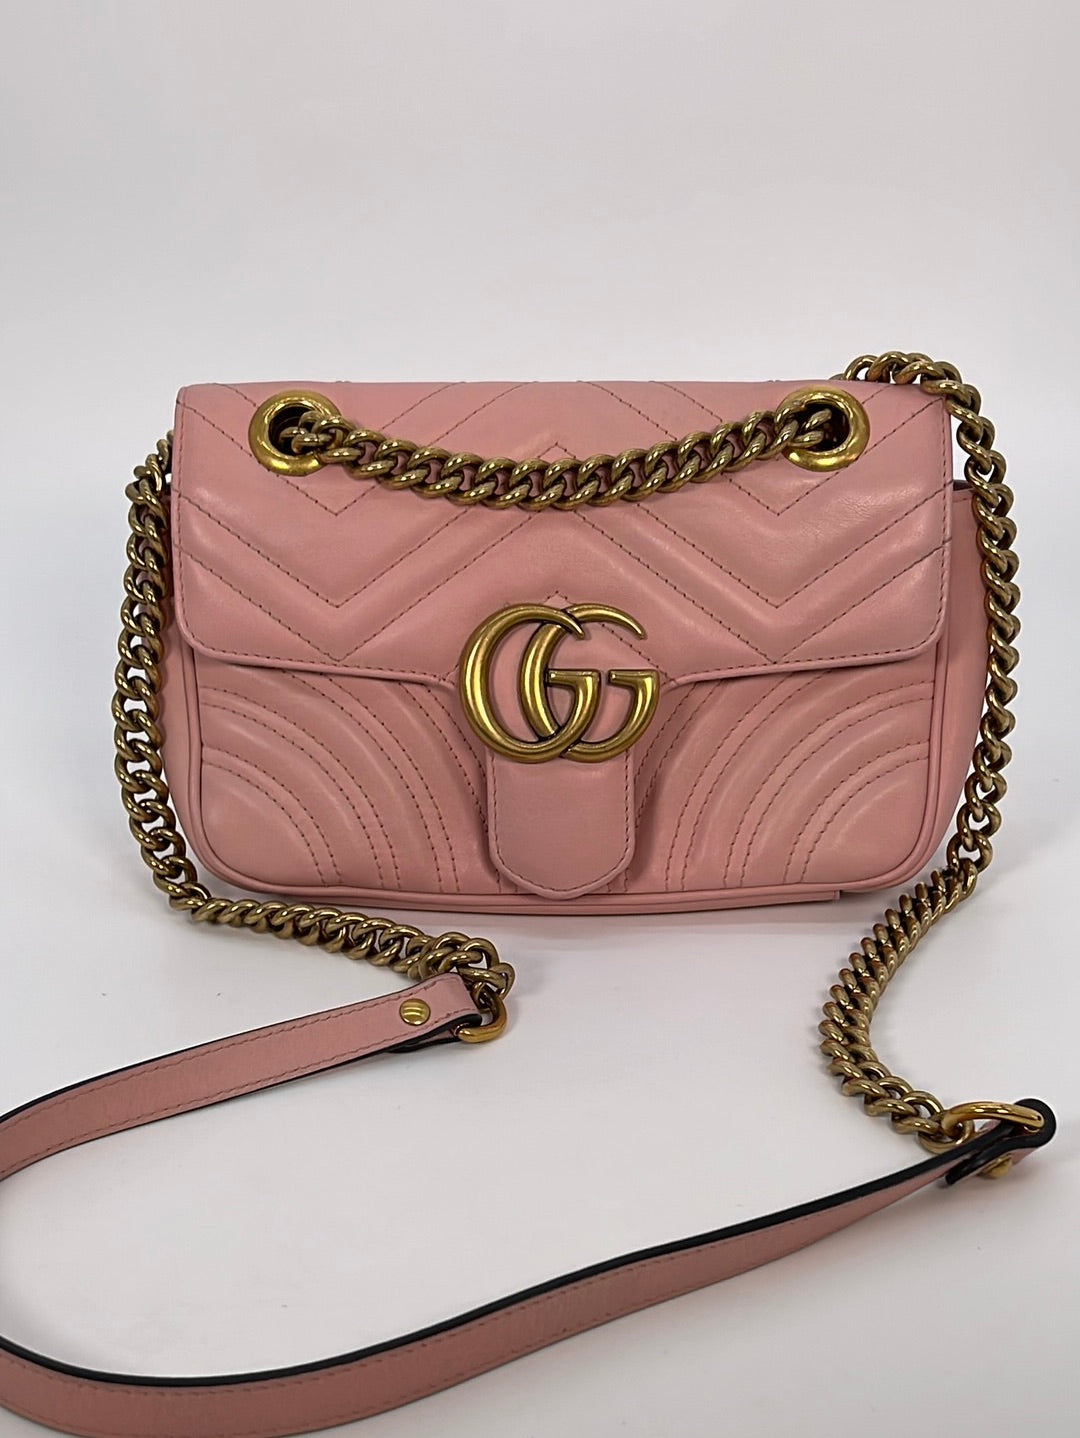 GUCCI Calfskin Matelasse Mini GG Marmont Shoulder Bag Perfect Pink 1195417